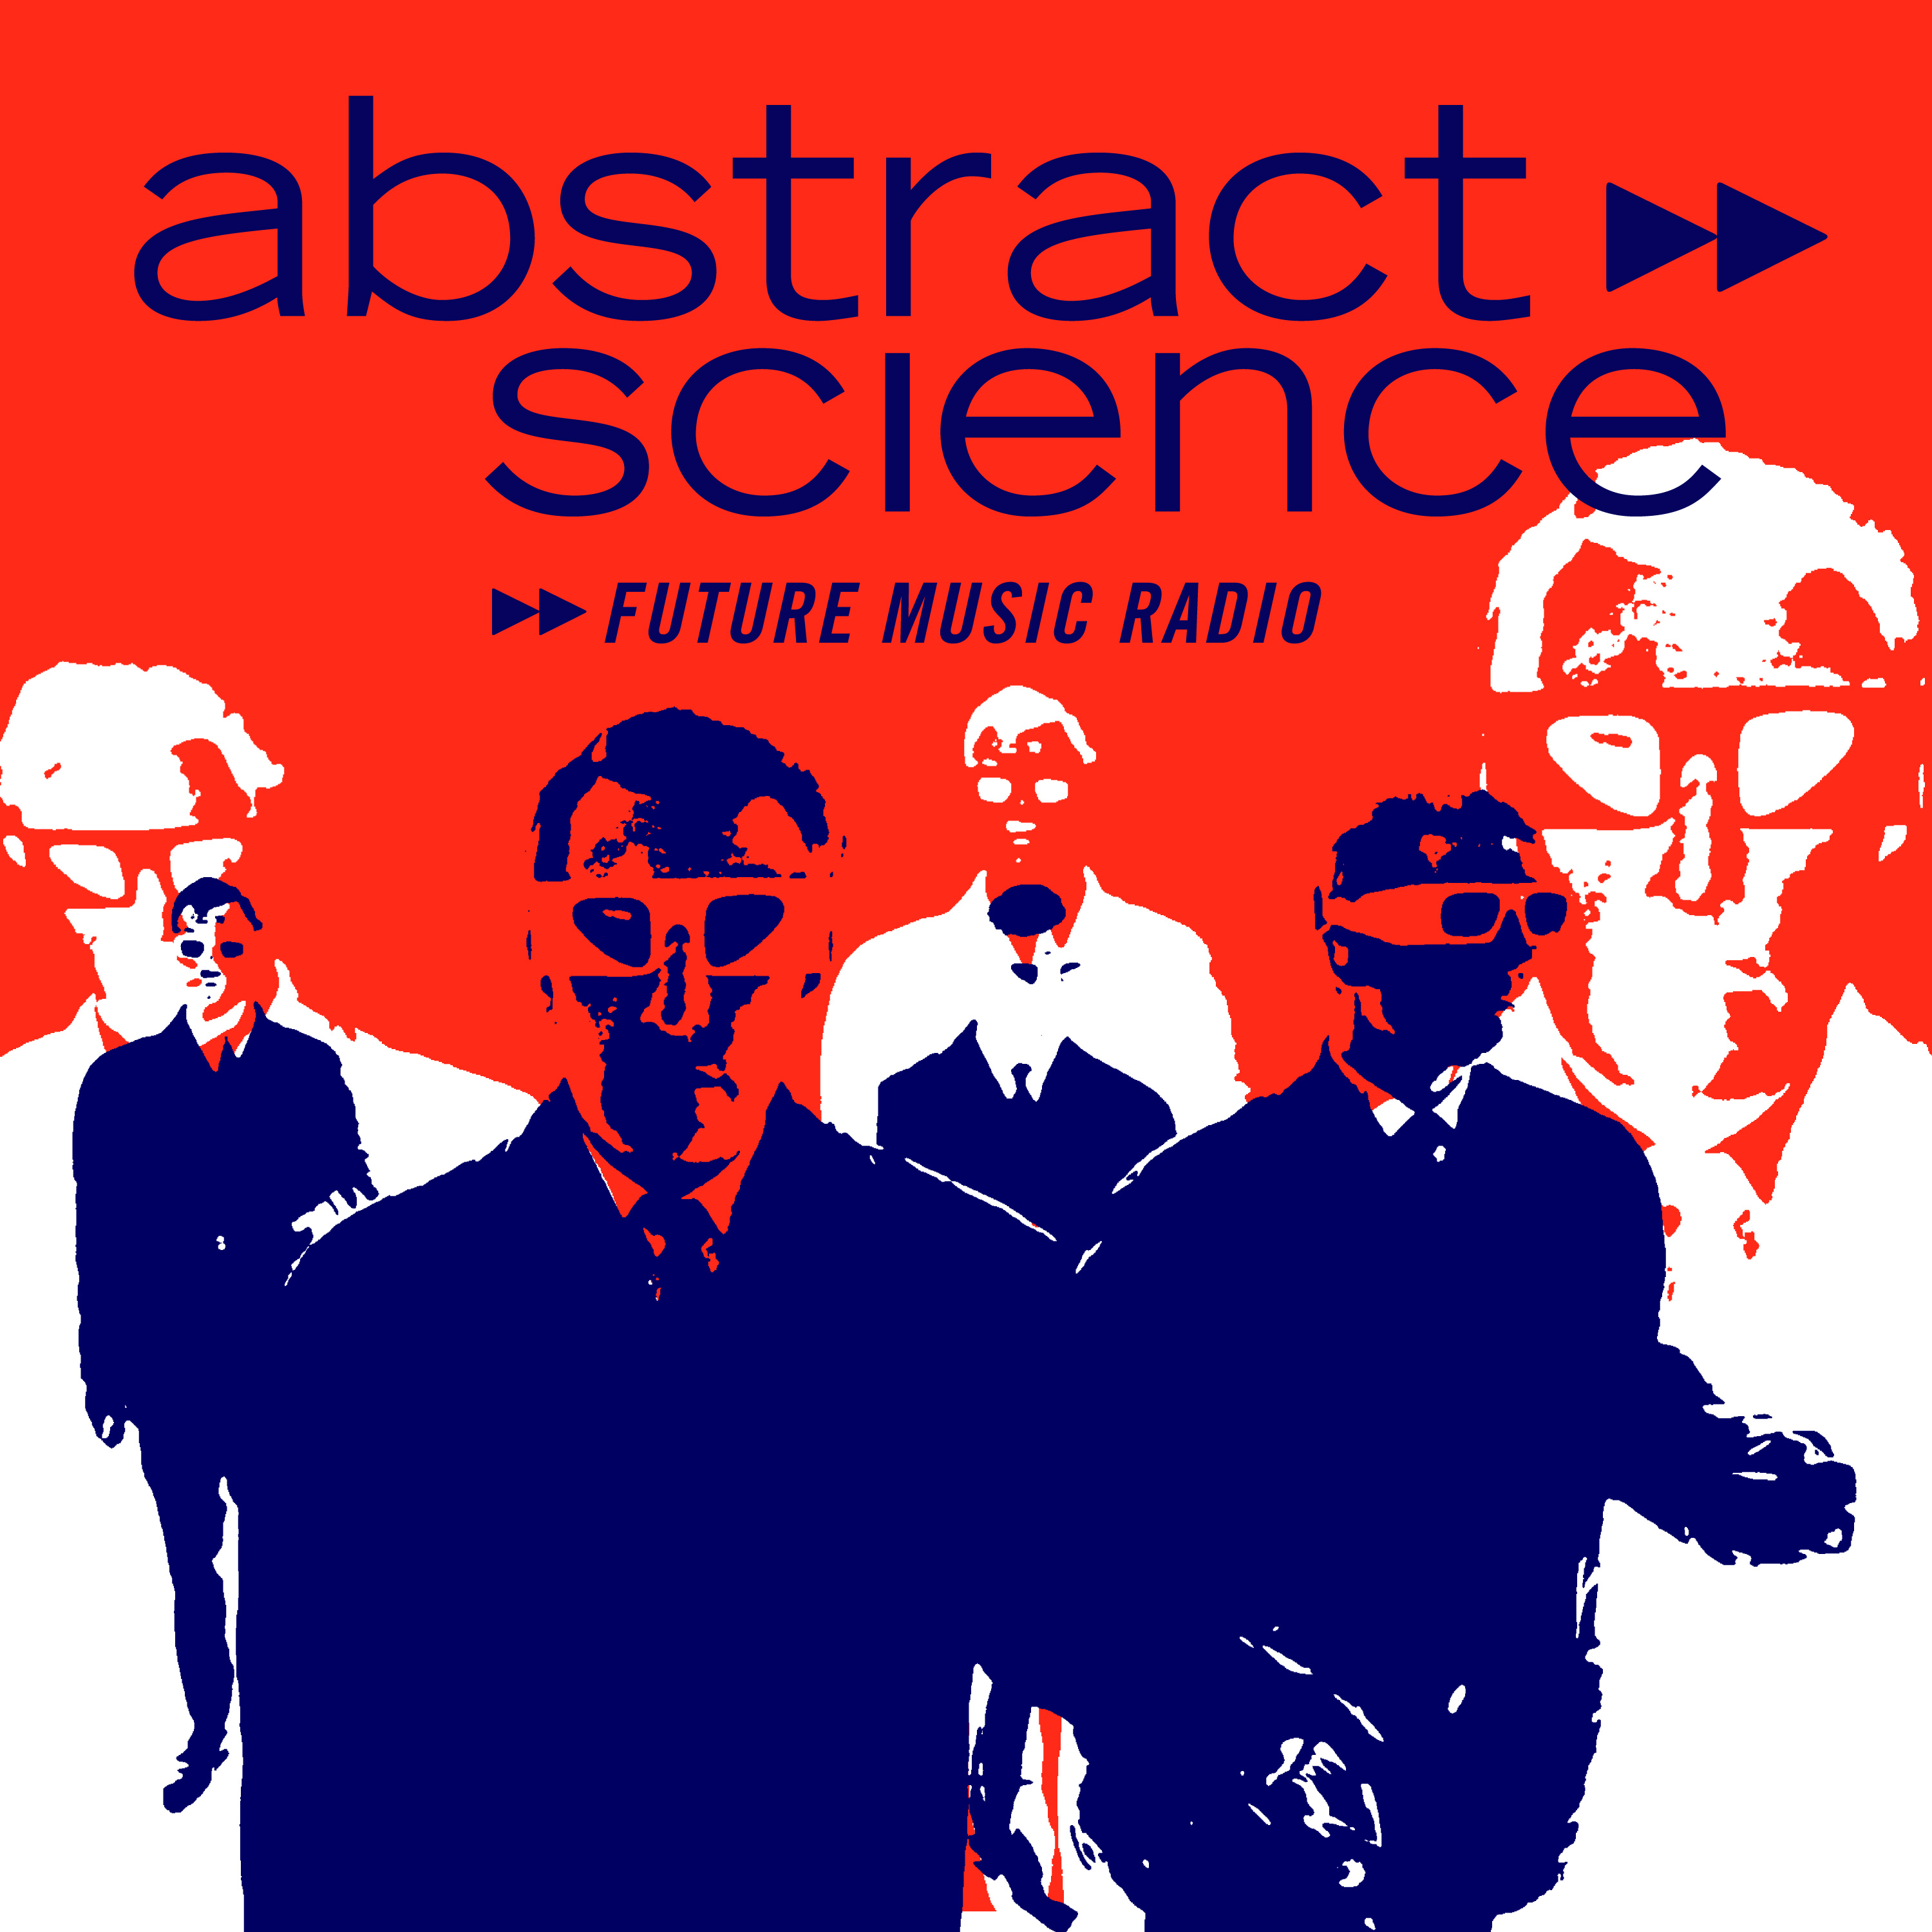 abstract science >> future music radio